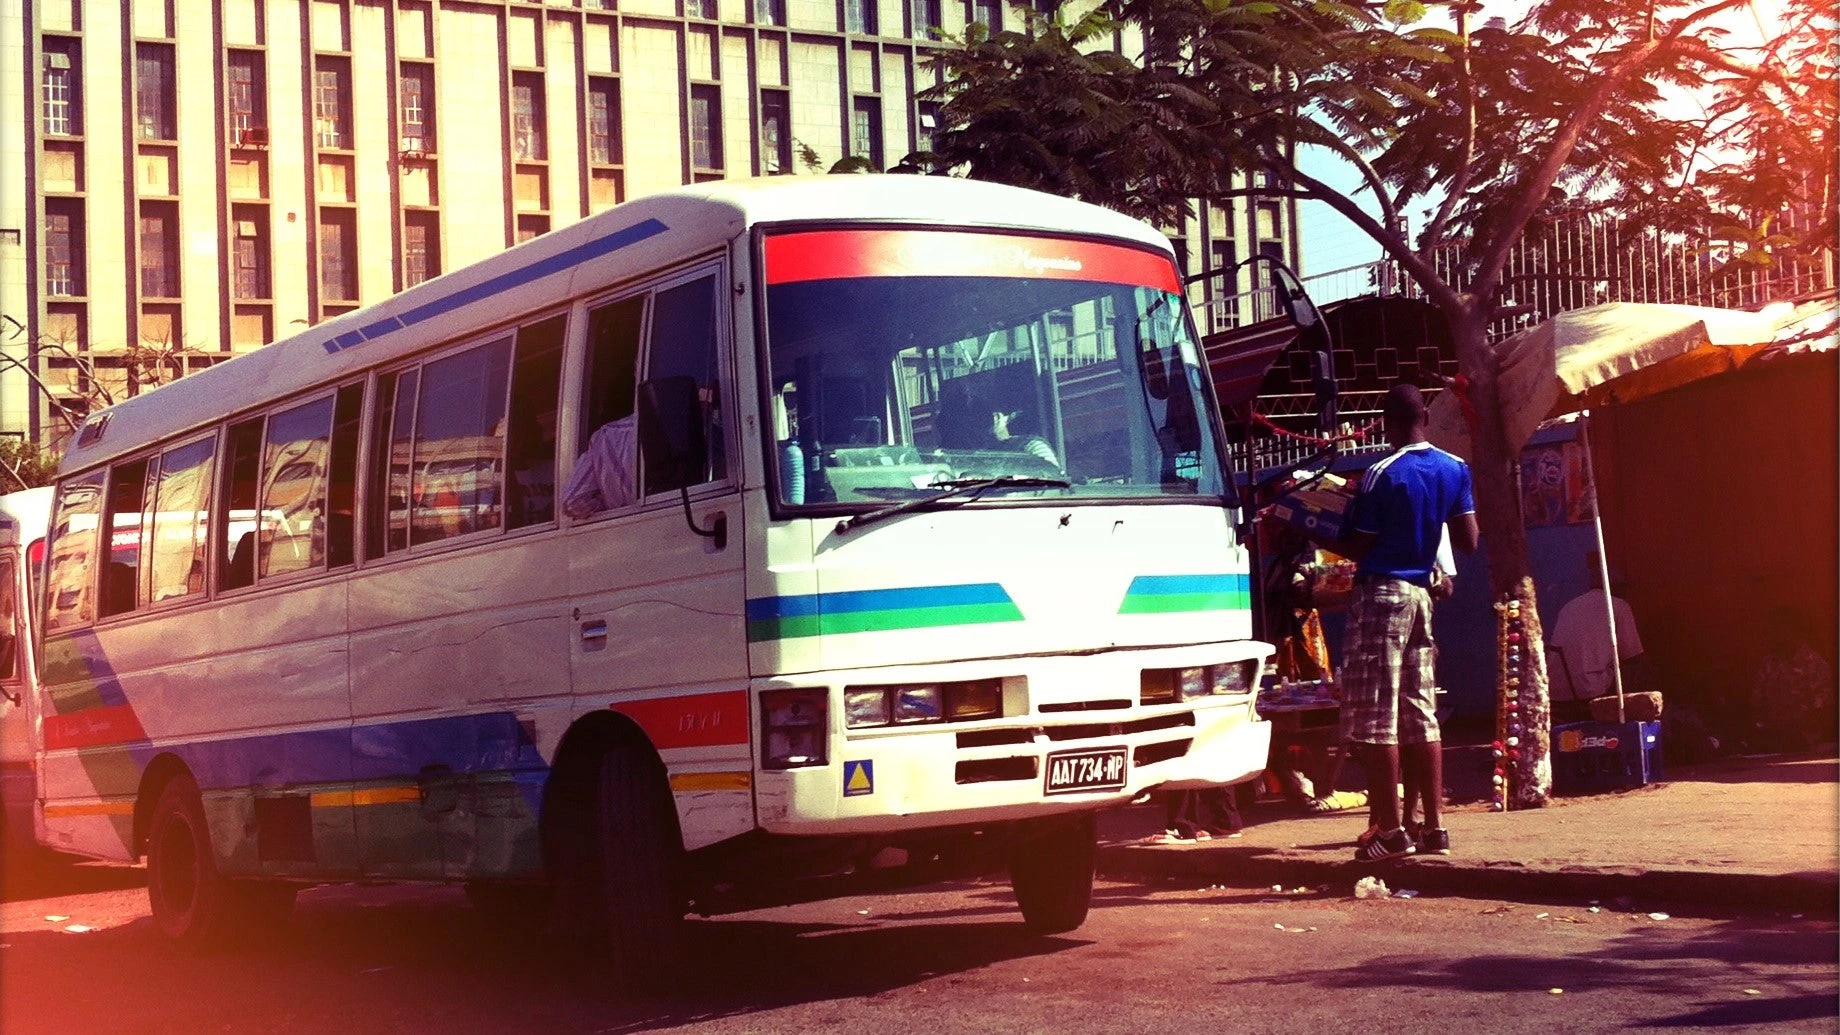 A local bus in Maputo, Mozambique. Photo: Bittegitte/Flickr